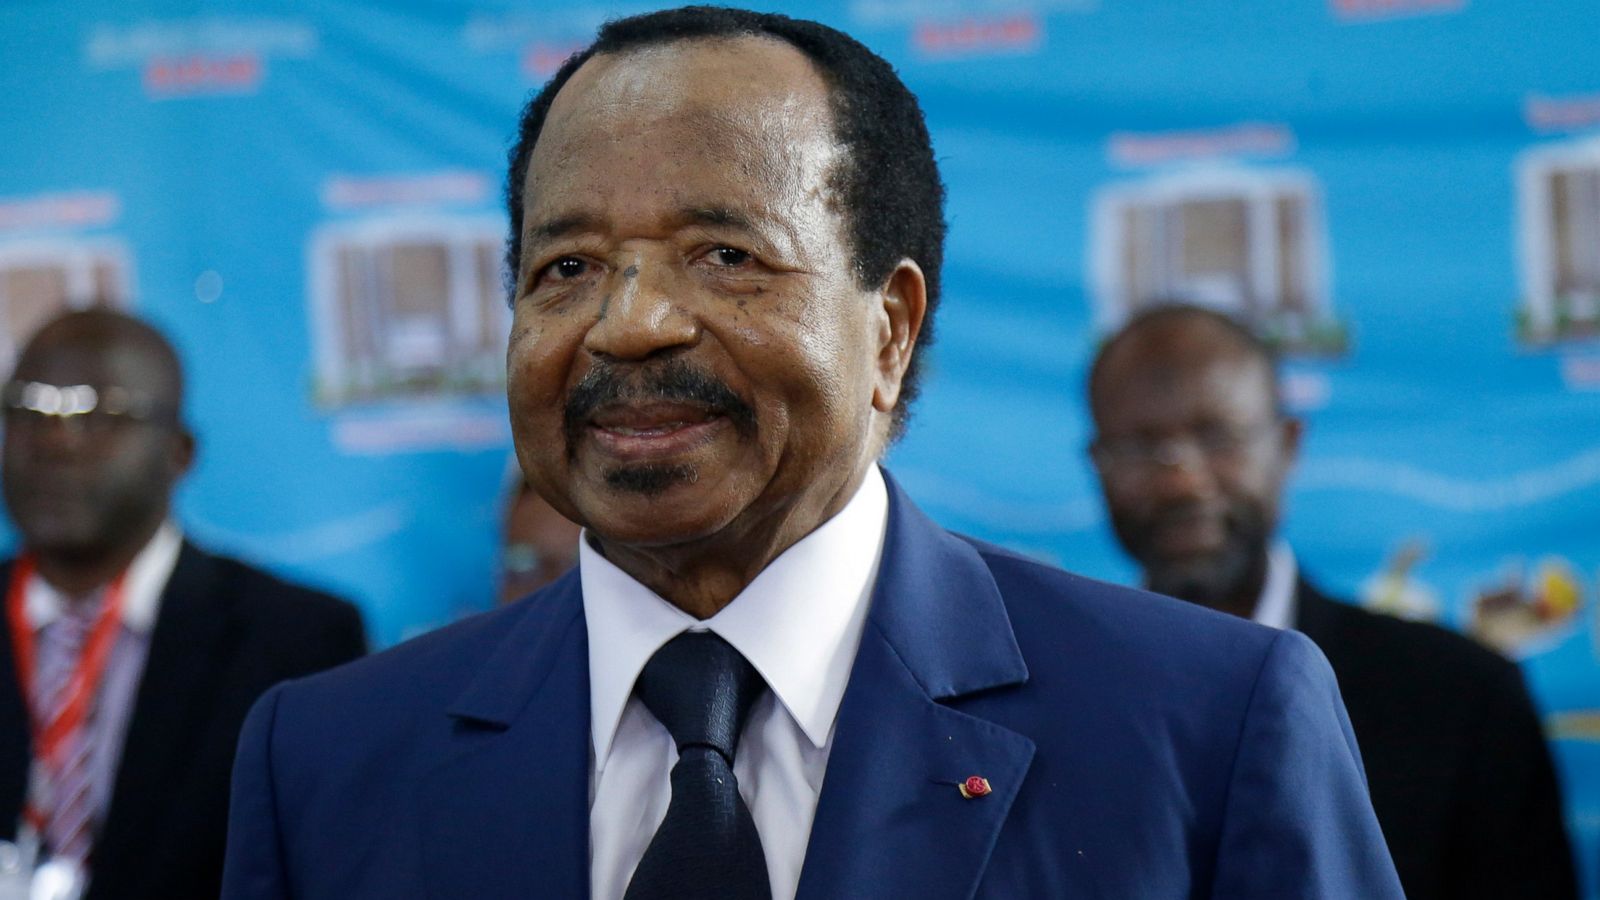 Paul Biya, The President of Cameroon